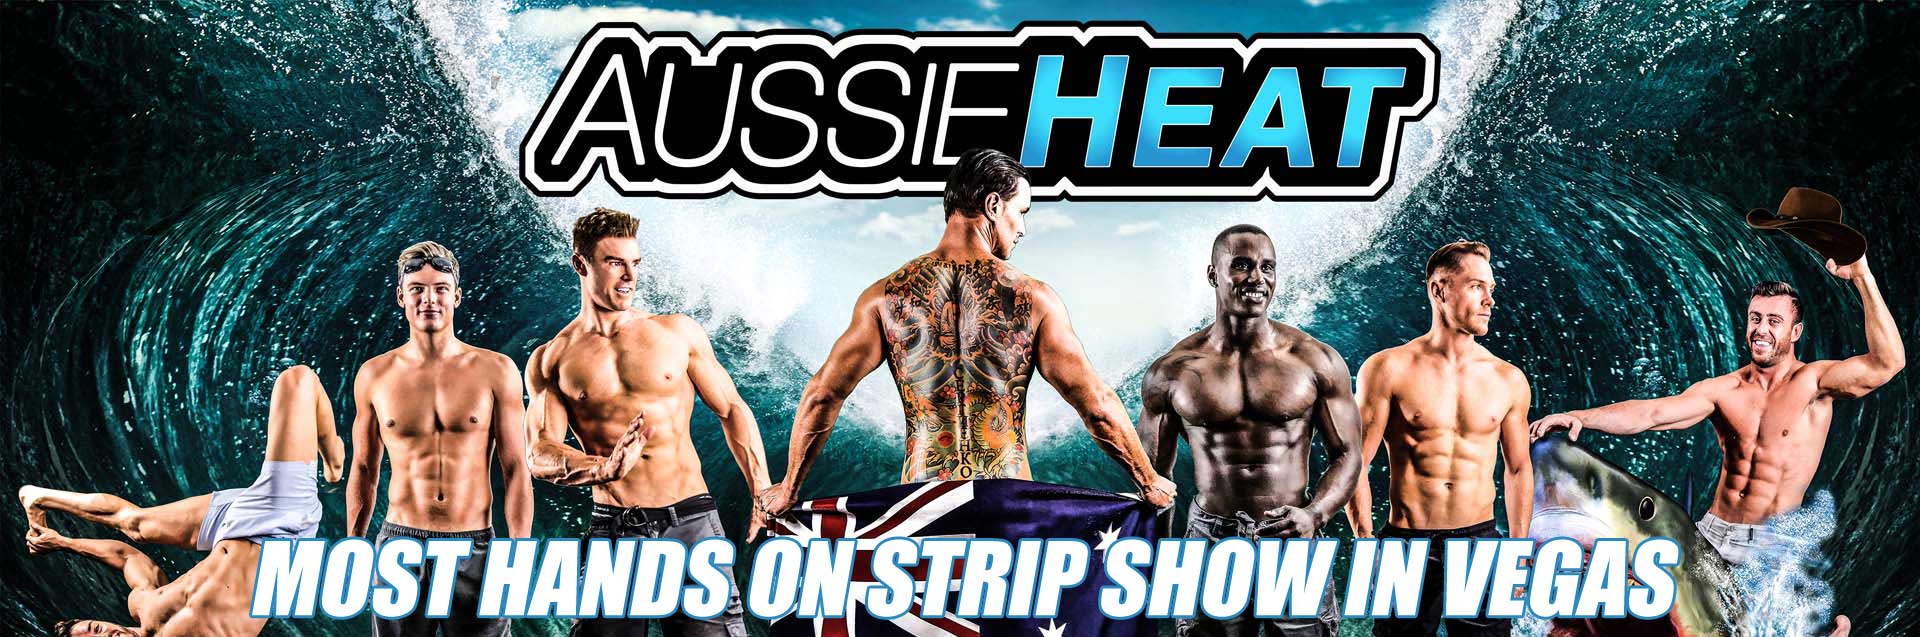 Aussie Heat is the best male strip show in Las Vegas!